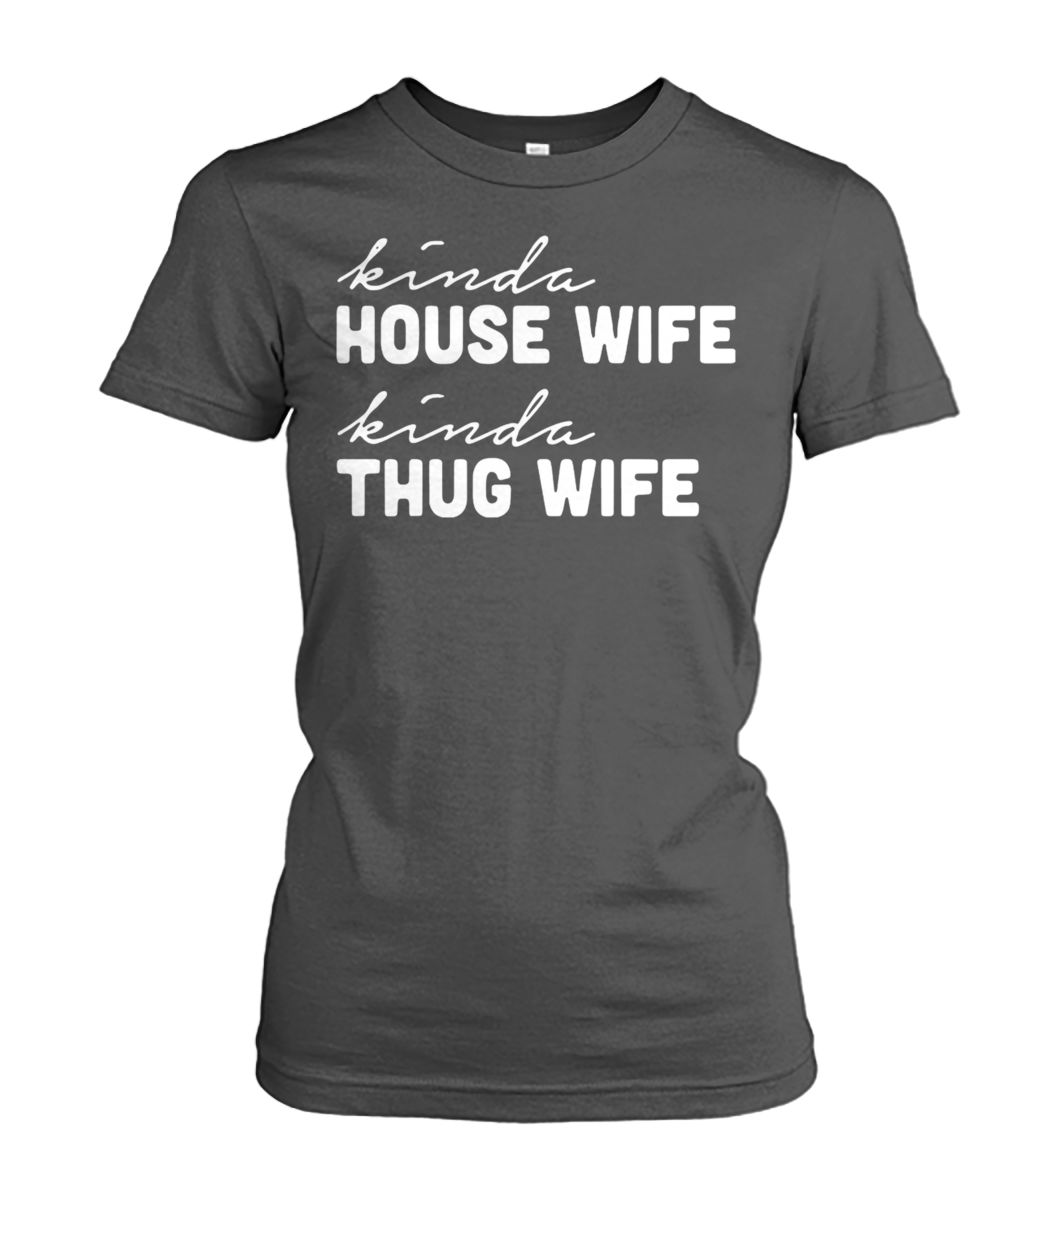 Kinda house wife kinda thug wife women's crew tee